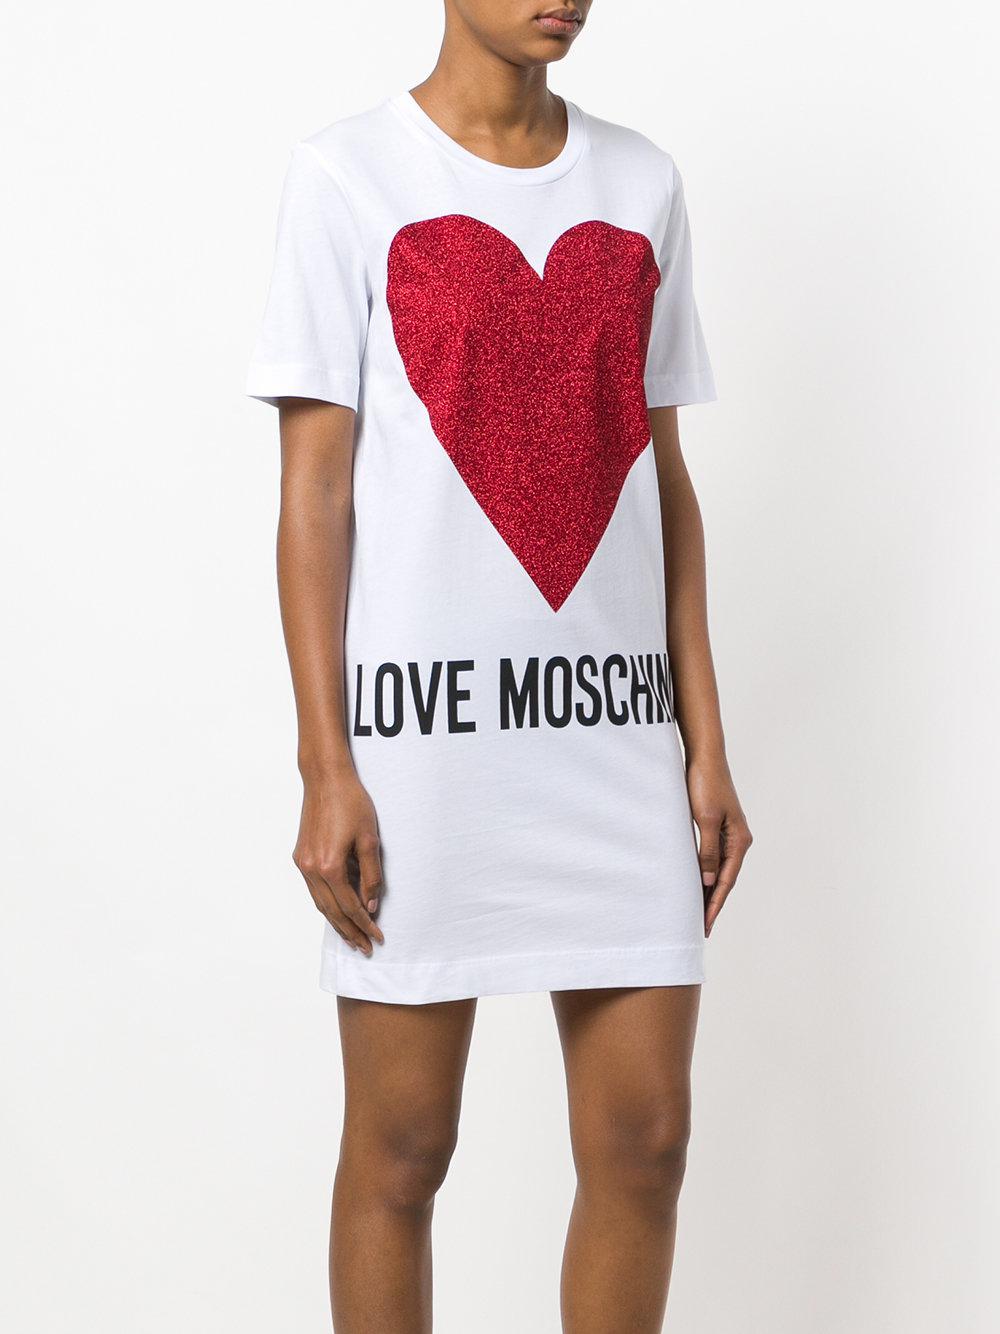 moschino tshirt dress